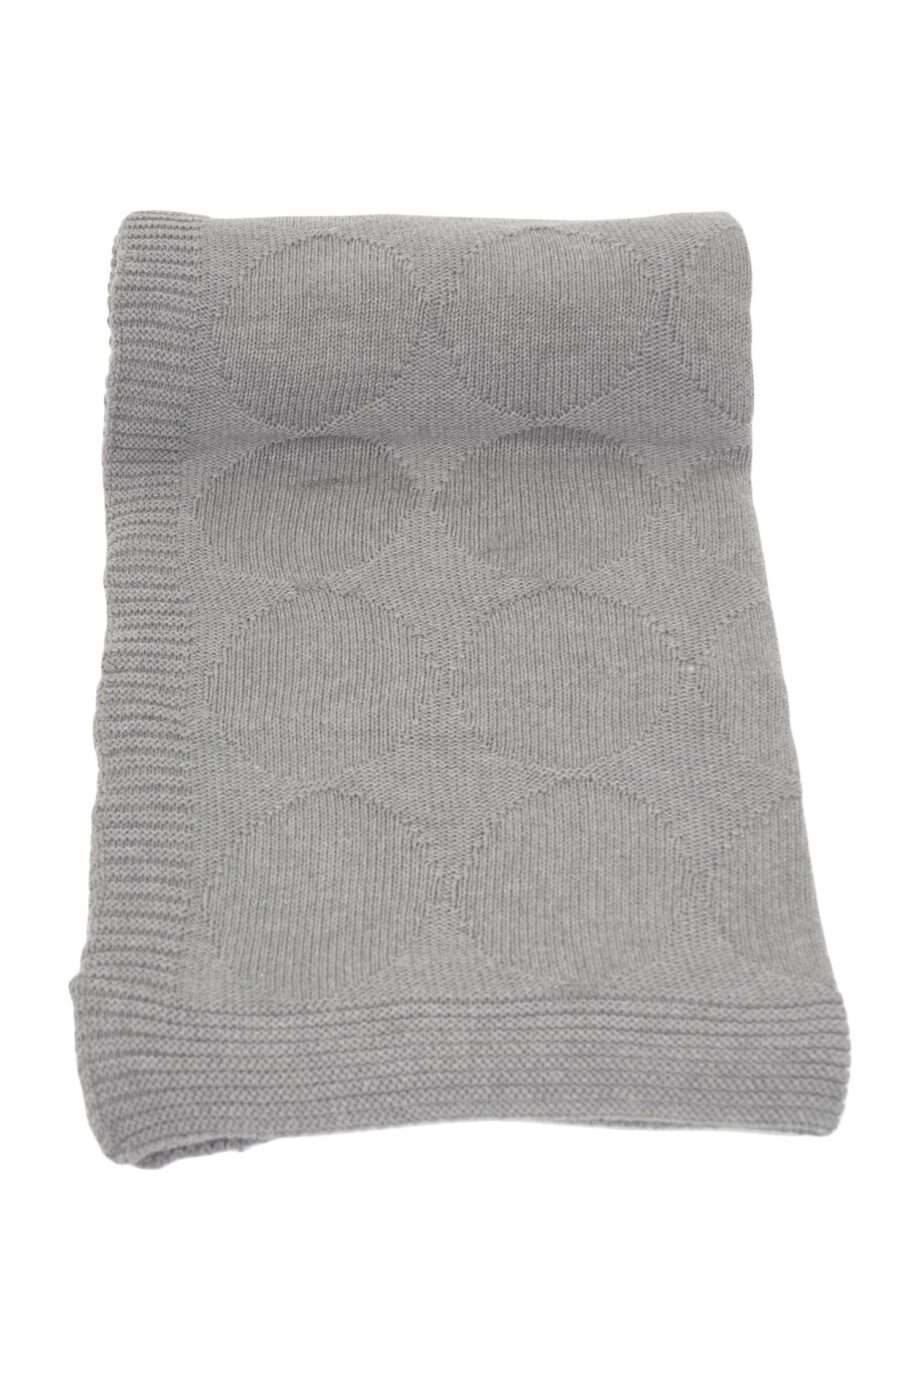 spots light grey knitted cotton plaid medium